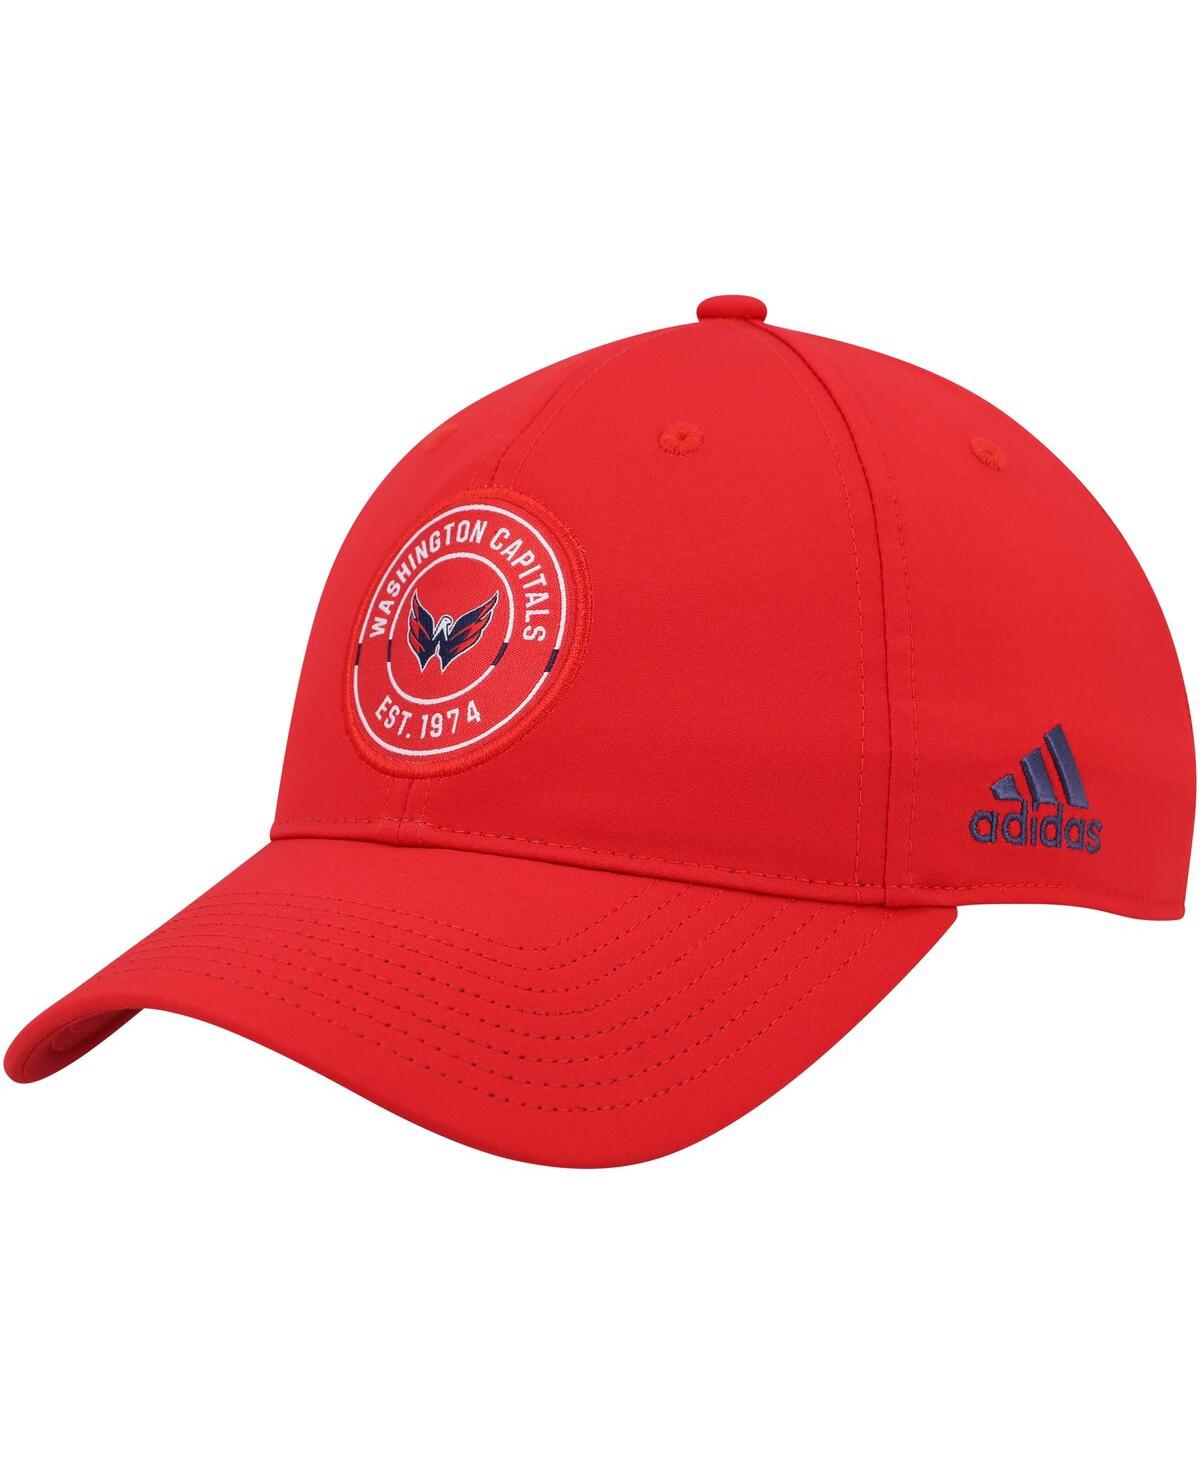 Shop Adidas Originals Men's Adidas Red Washington Capitals Team Circle Slouch Adjustable Hat